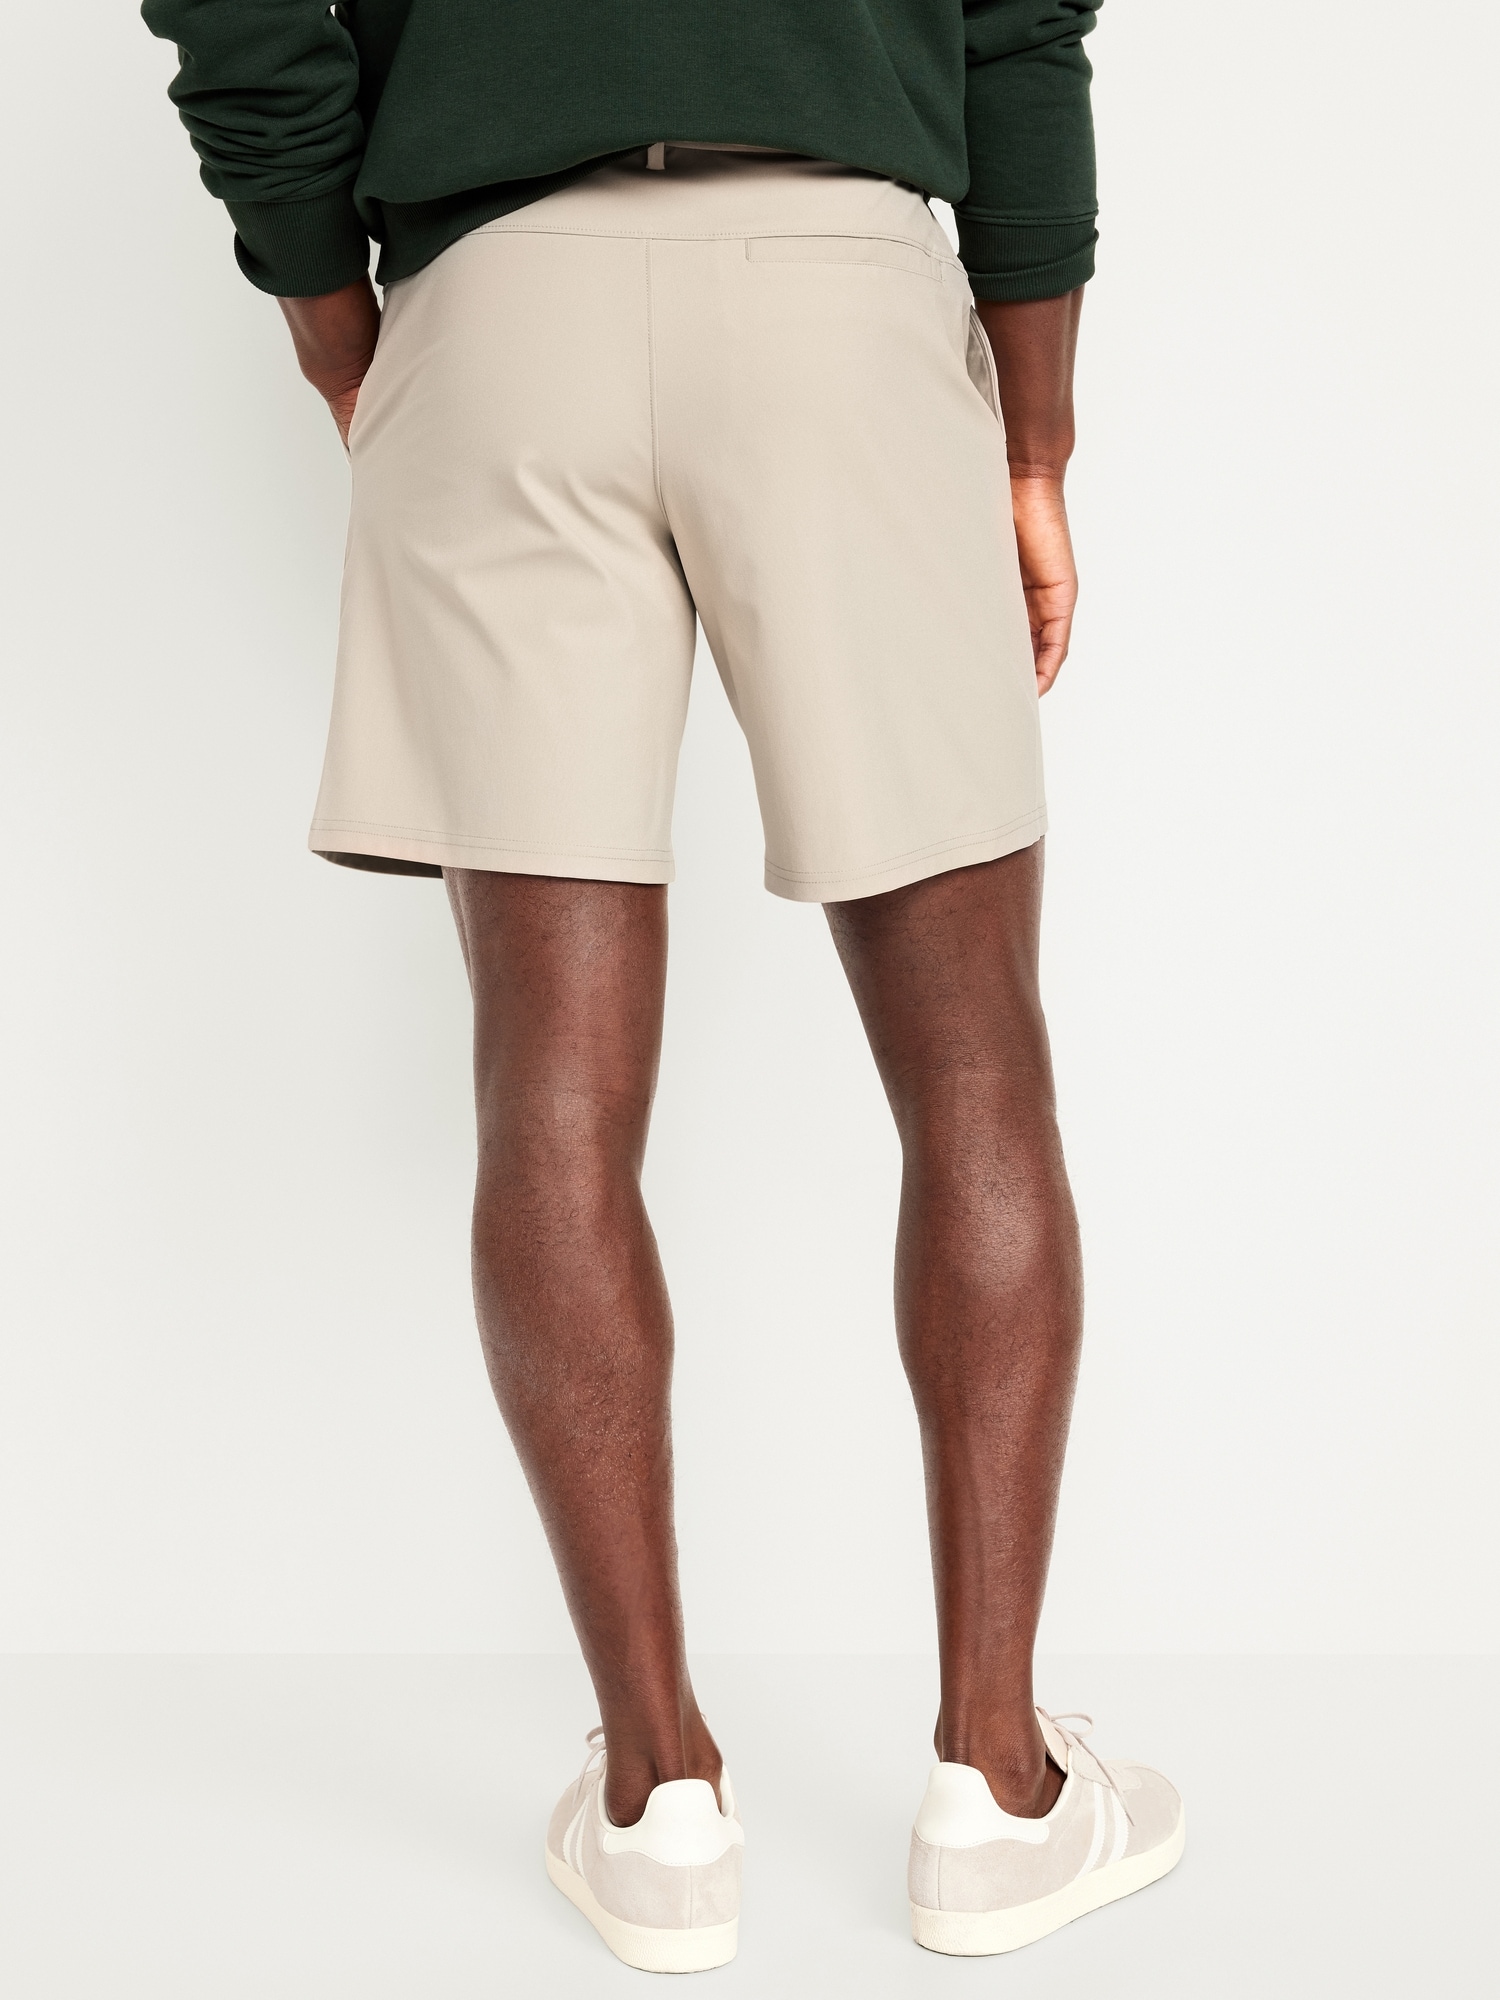 Hybrid Tech Chino Shorts - 8-inch inseam